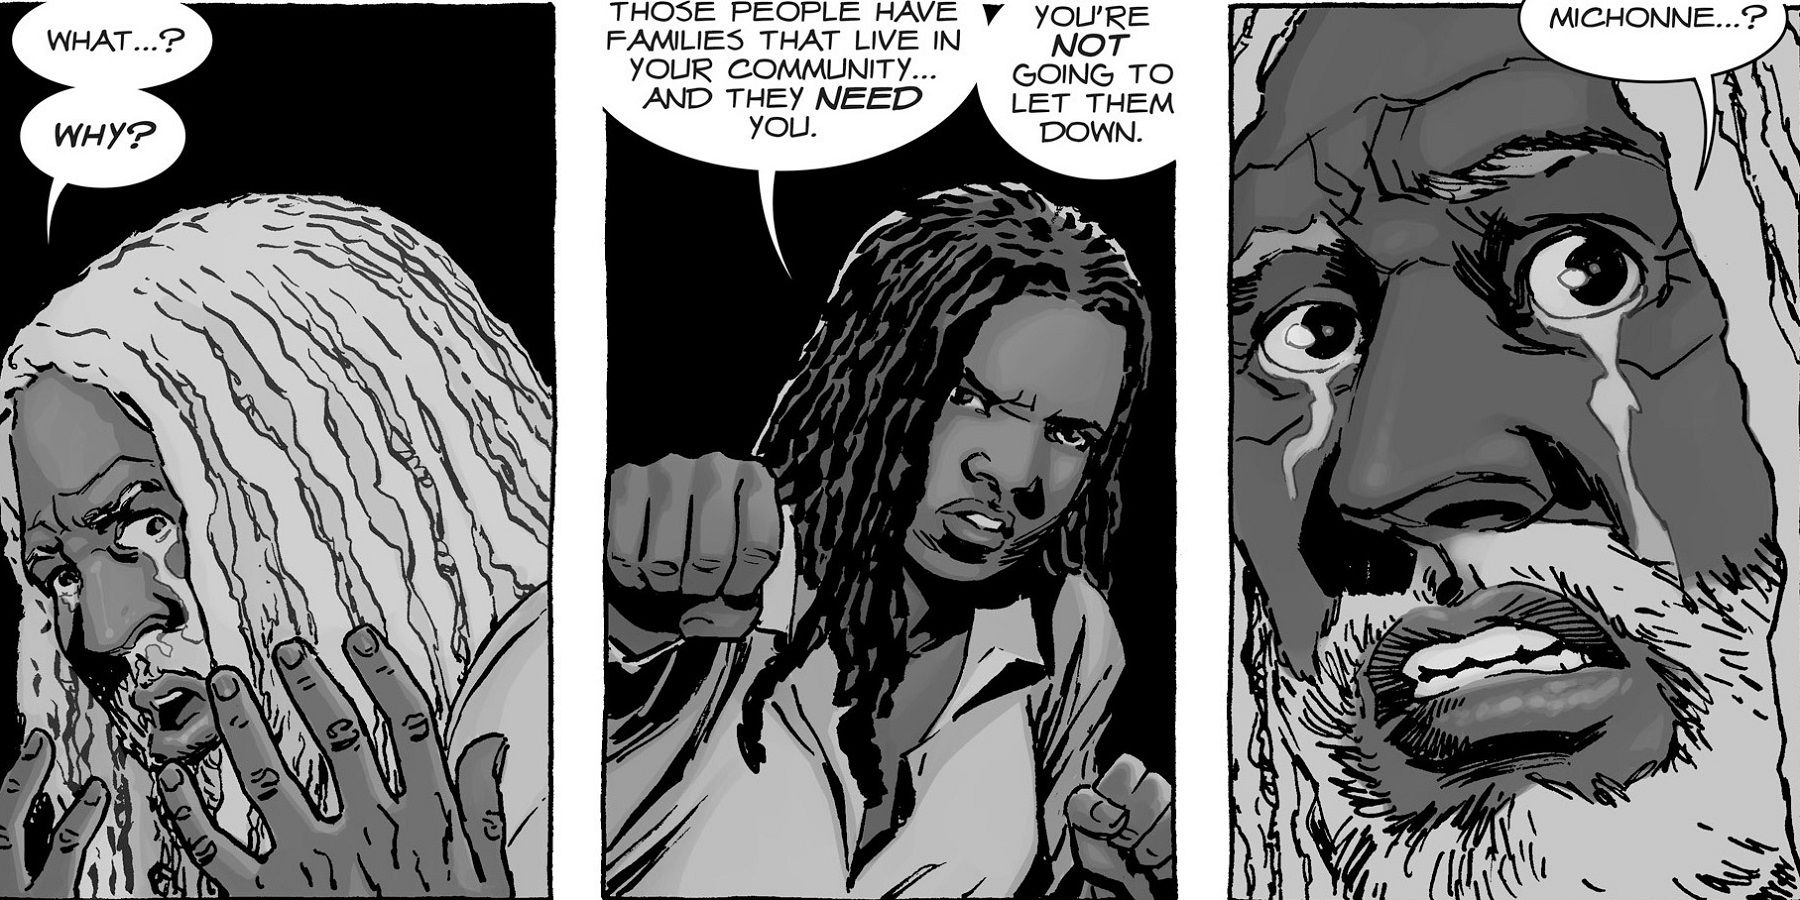 Michonne and Ezekiel from The Walking Dead comics